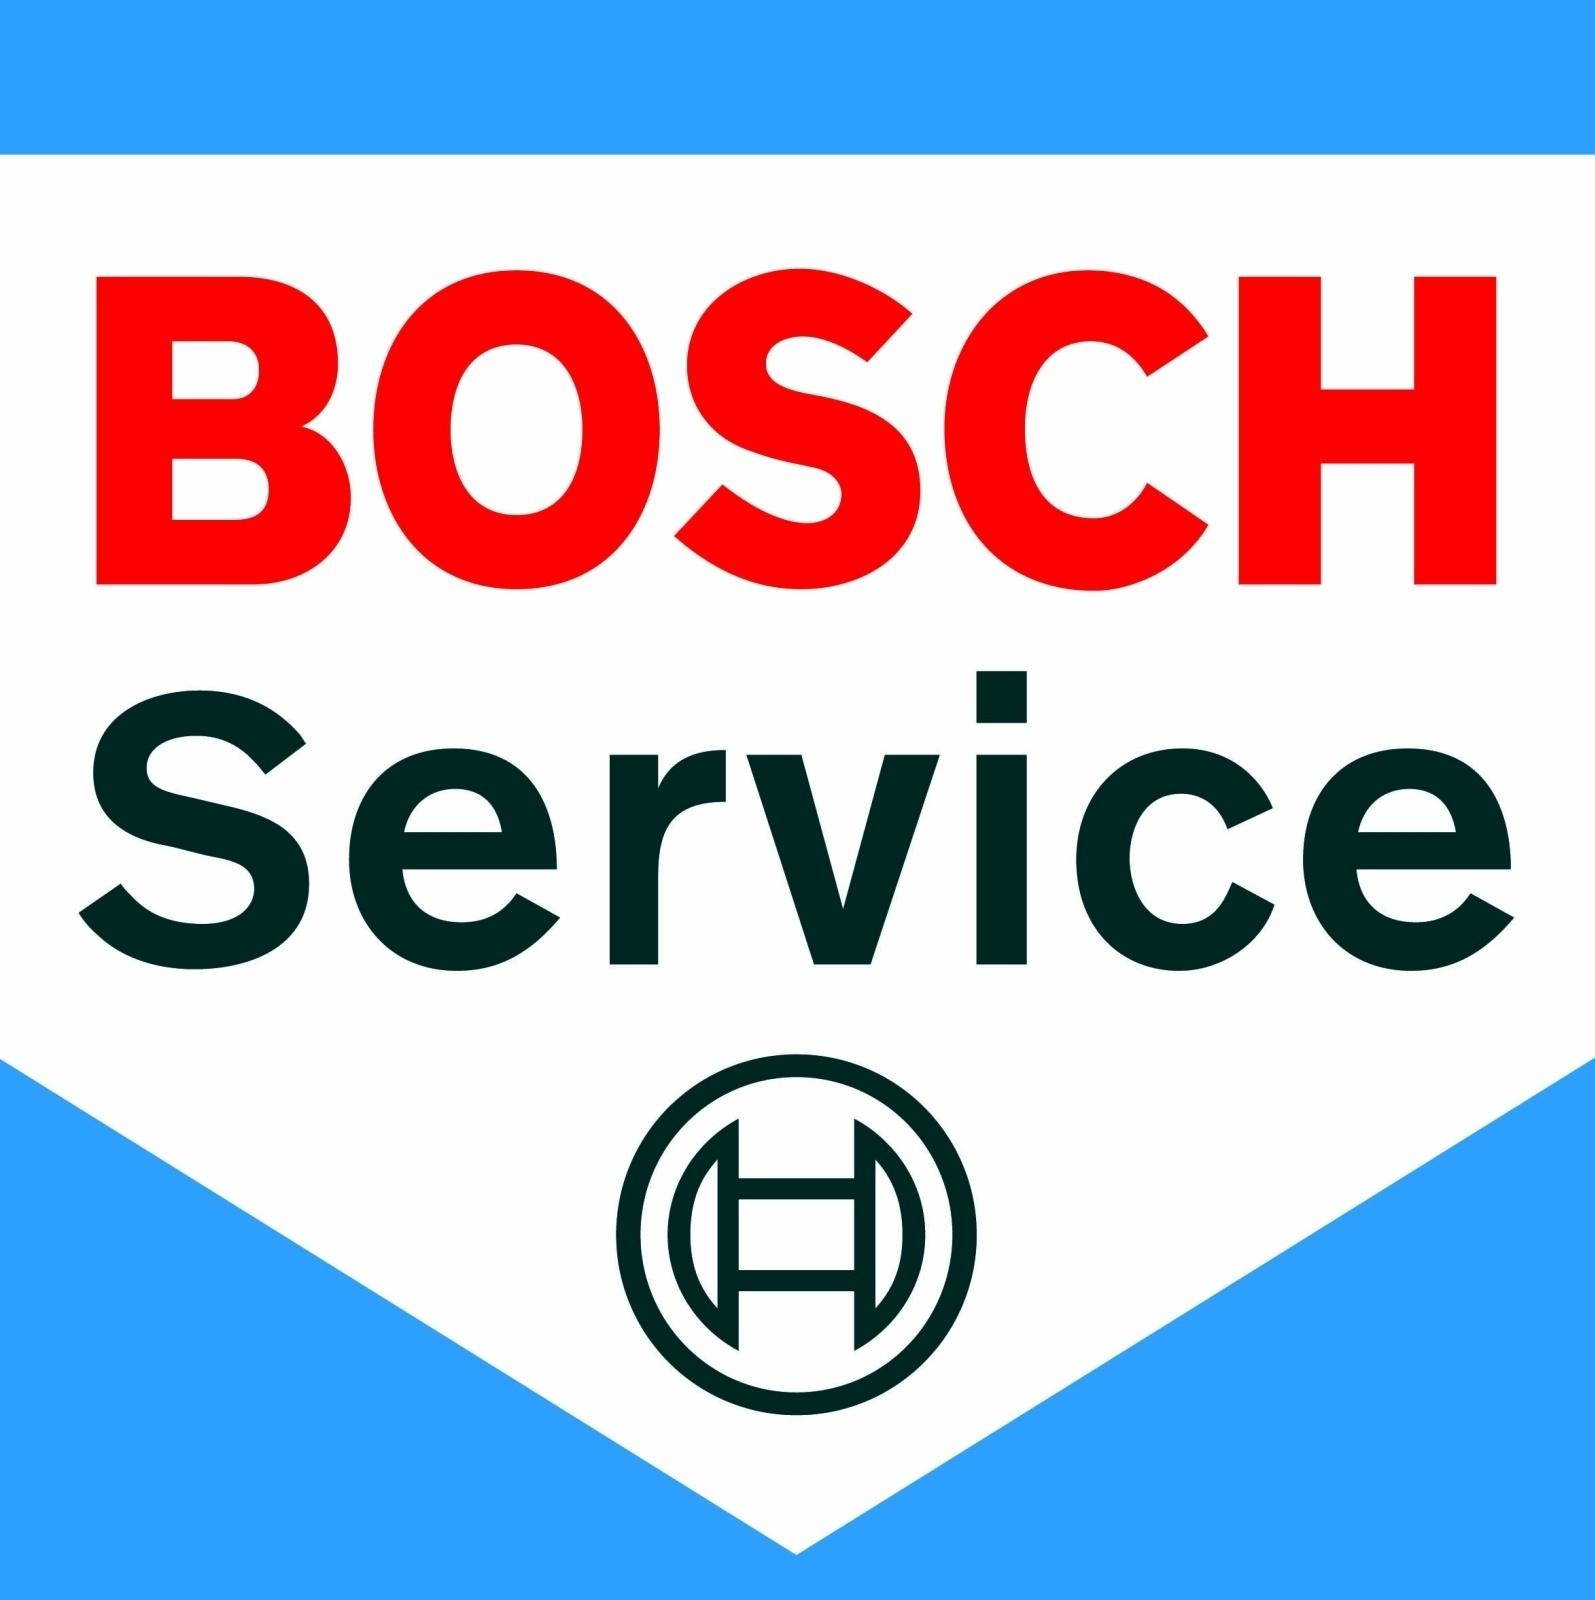 Garage Gouillandeau Bosch Car Service Haute Goulaine